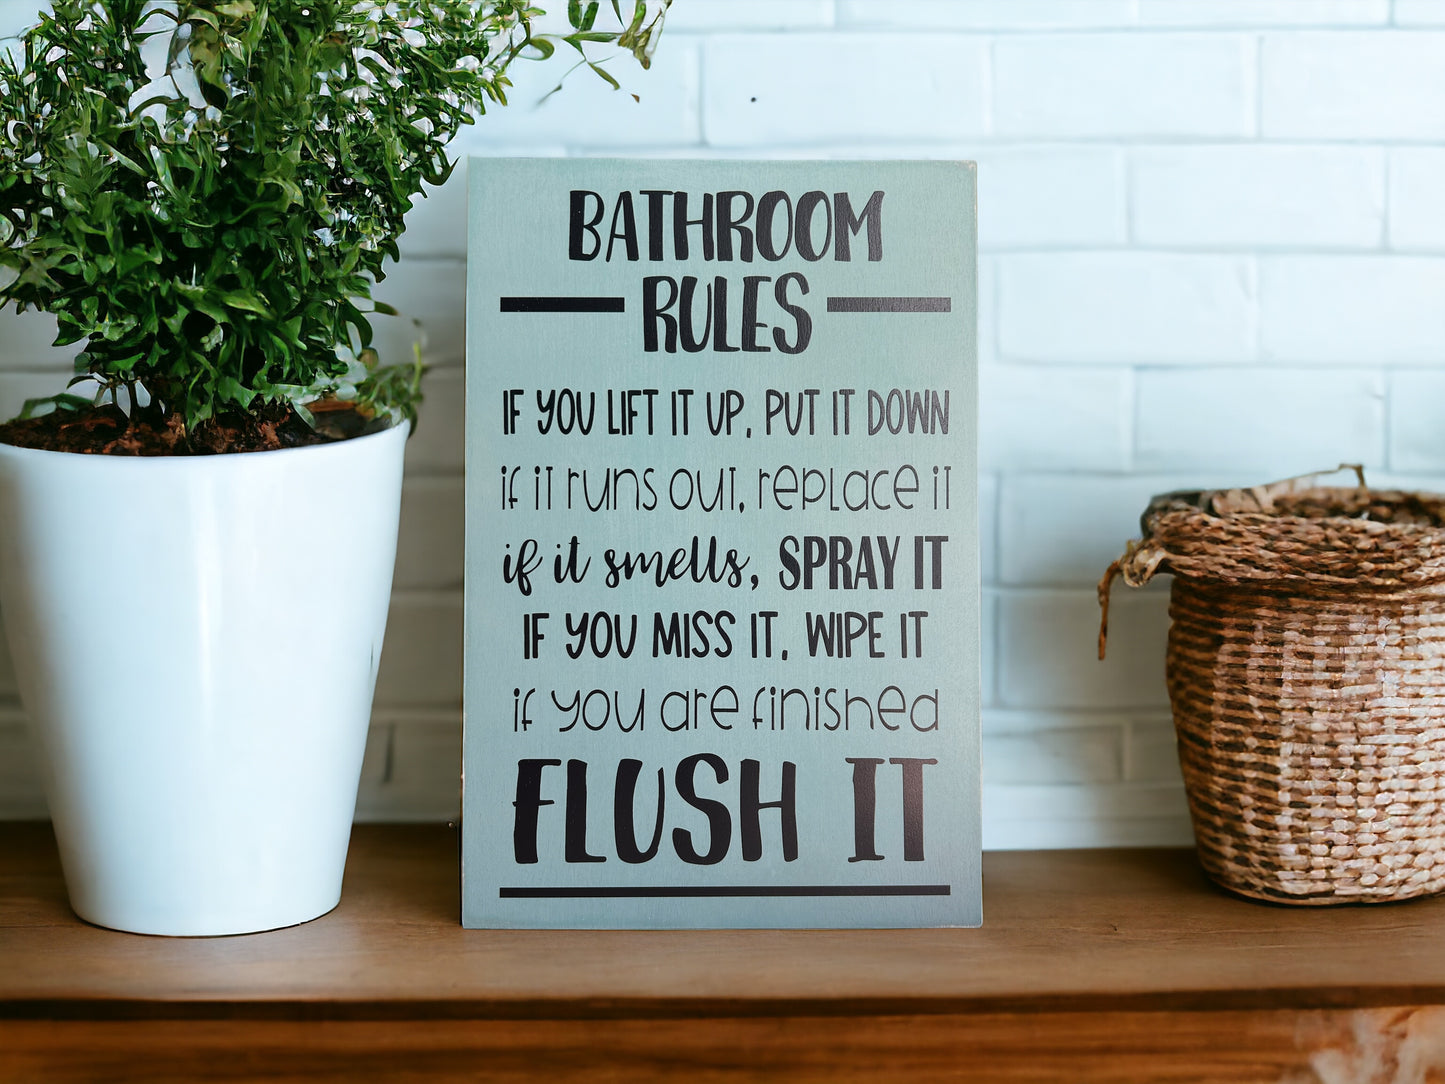 Bathroom Rules - Funny Rustic Wood Bathroom Sign